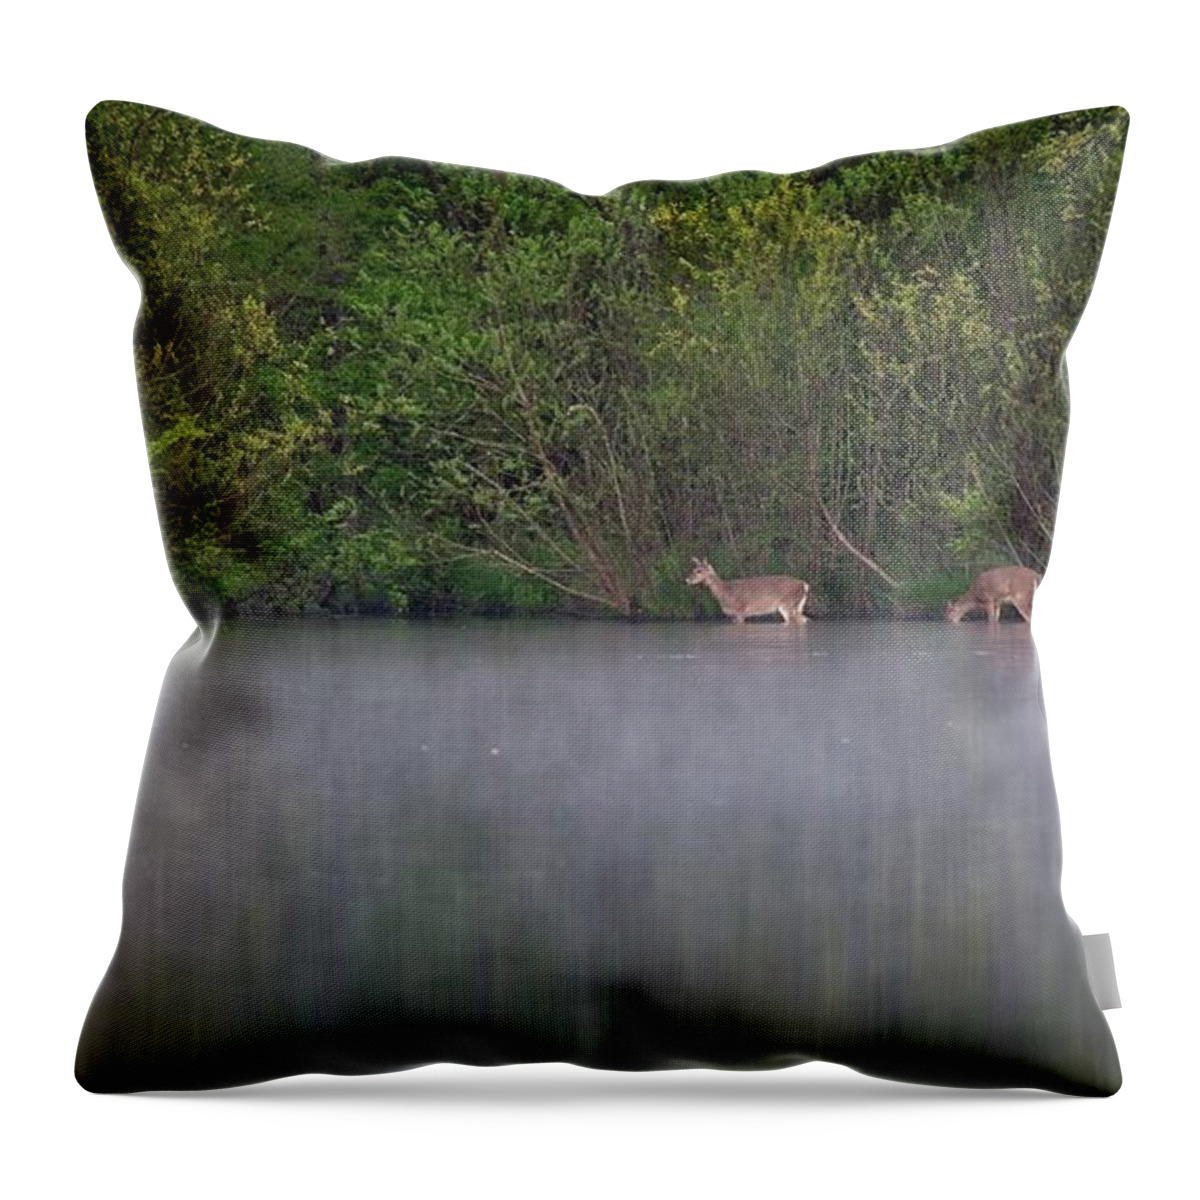 Wildlife Throw Pillow featuring the photograph Water Grazing Deer by John Benedict